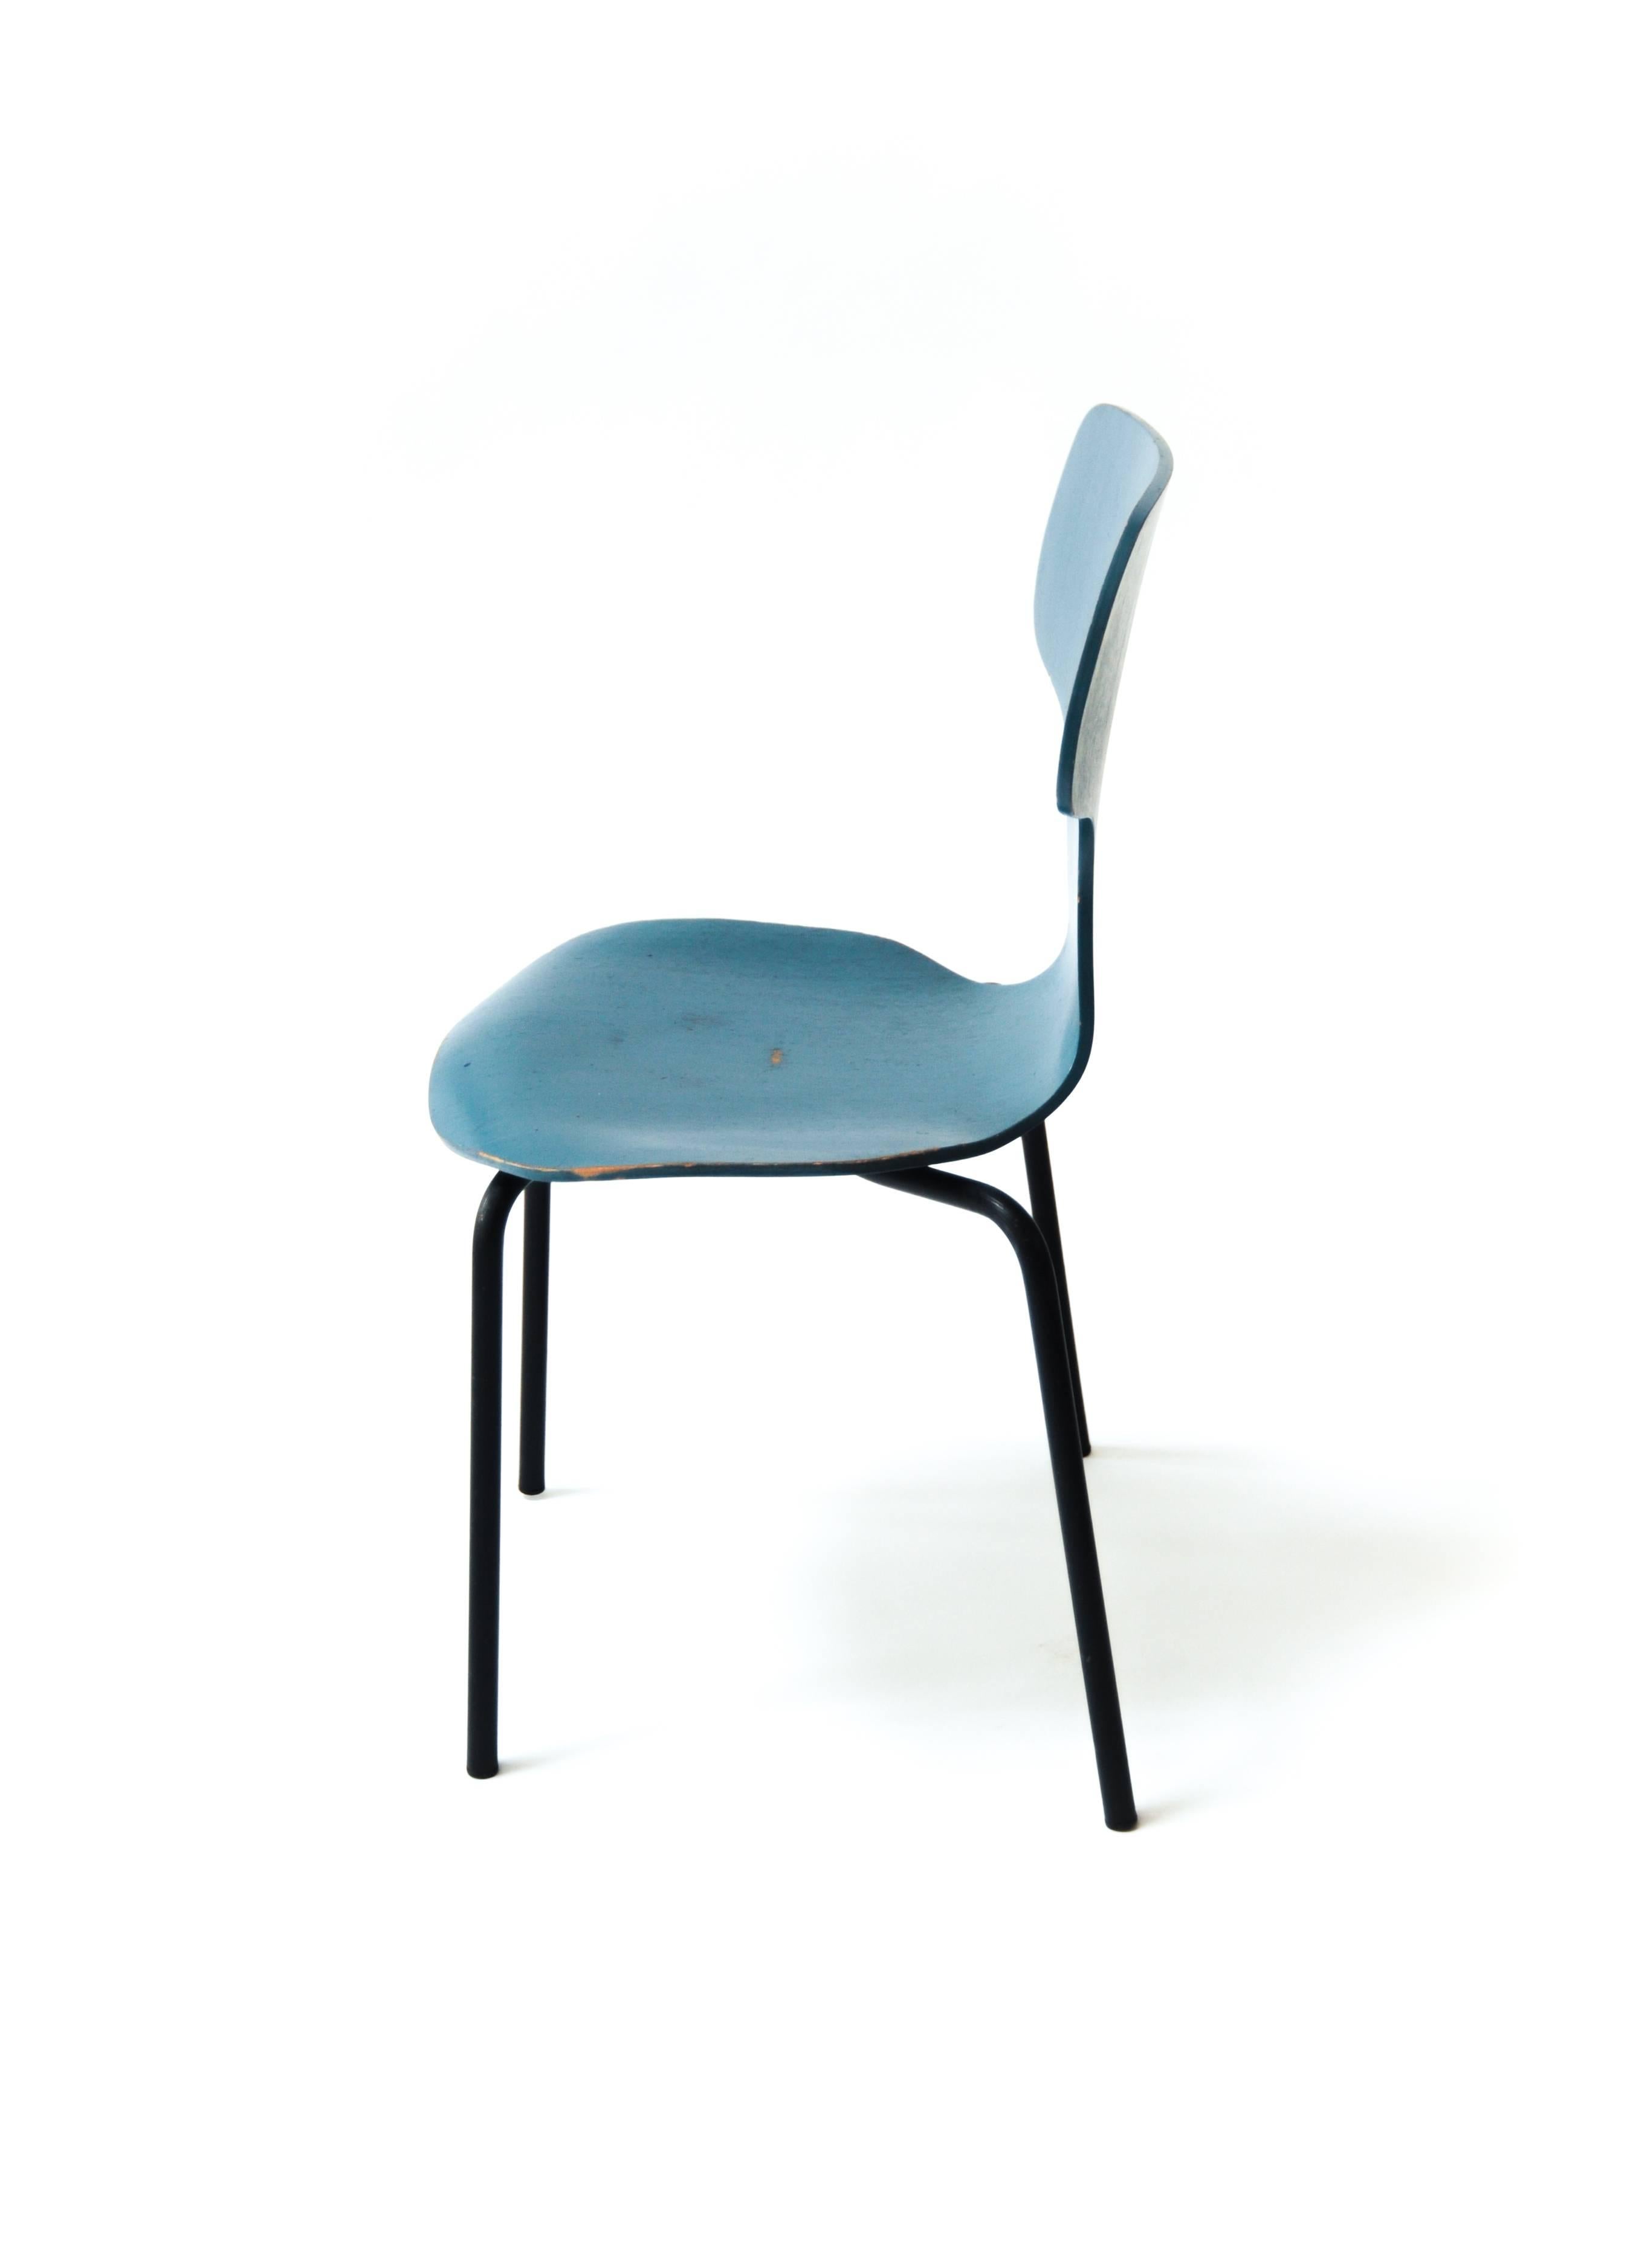 Danish Pair of Model 3103 Chairs, Designed by Arne Jacobsen, Vintage, Denmark, 1955 For Sale